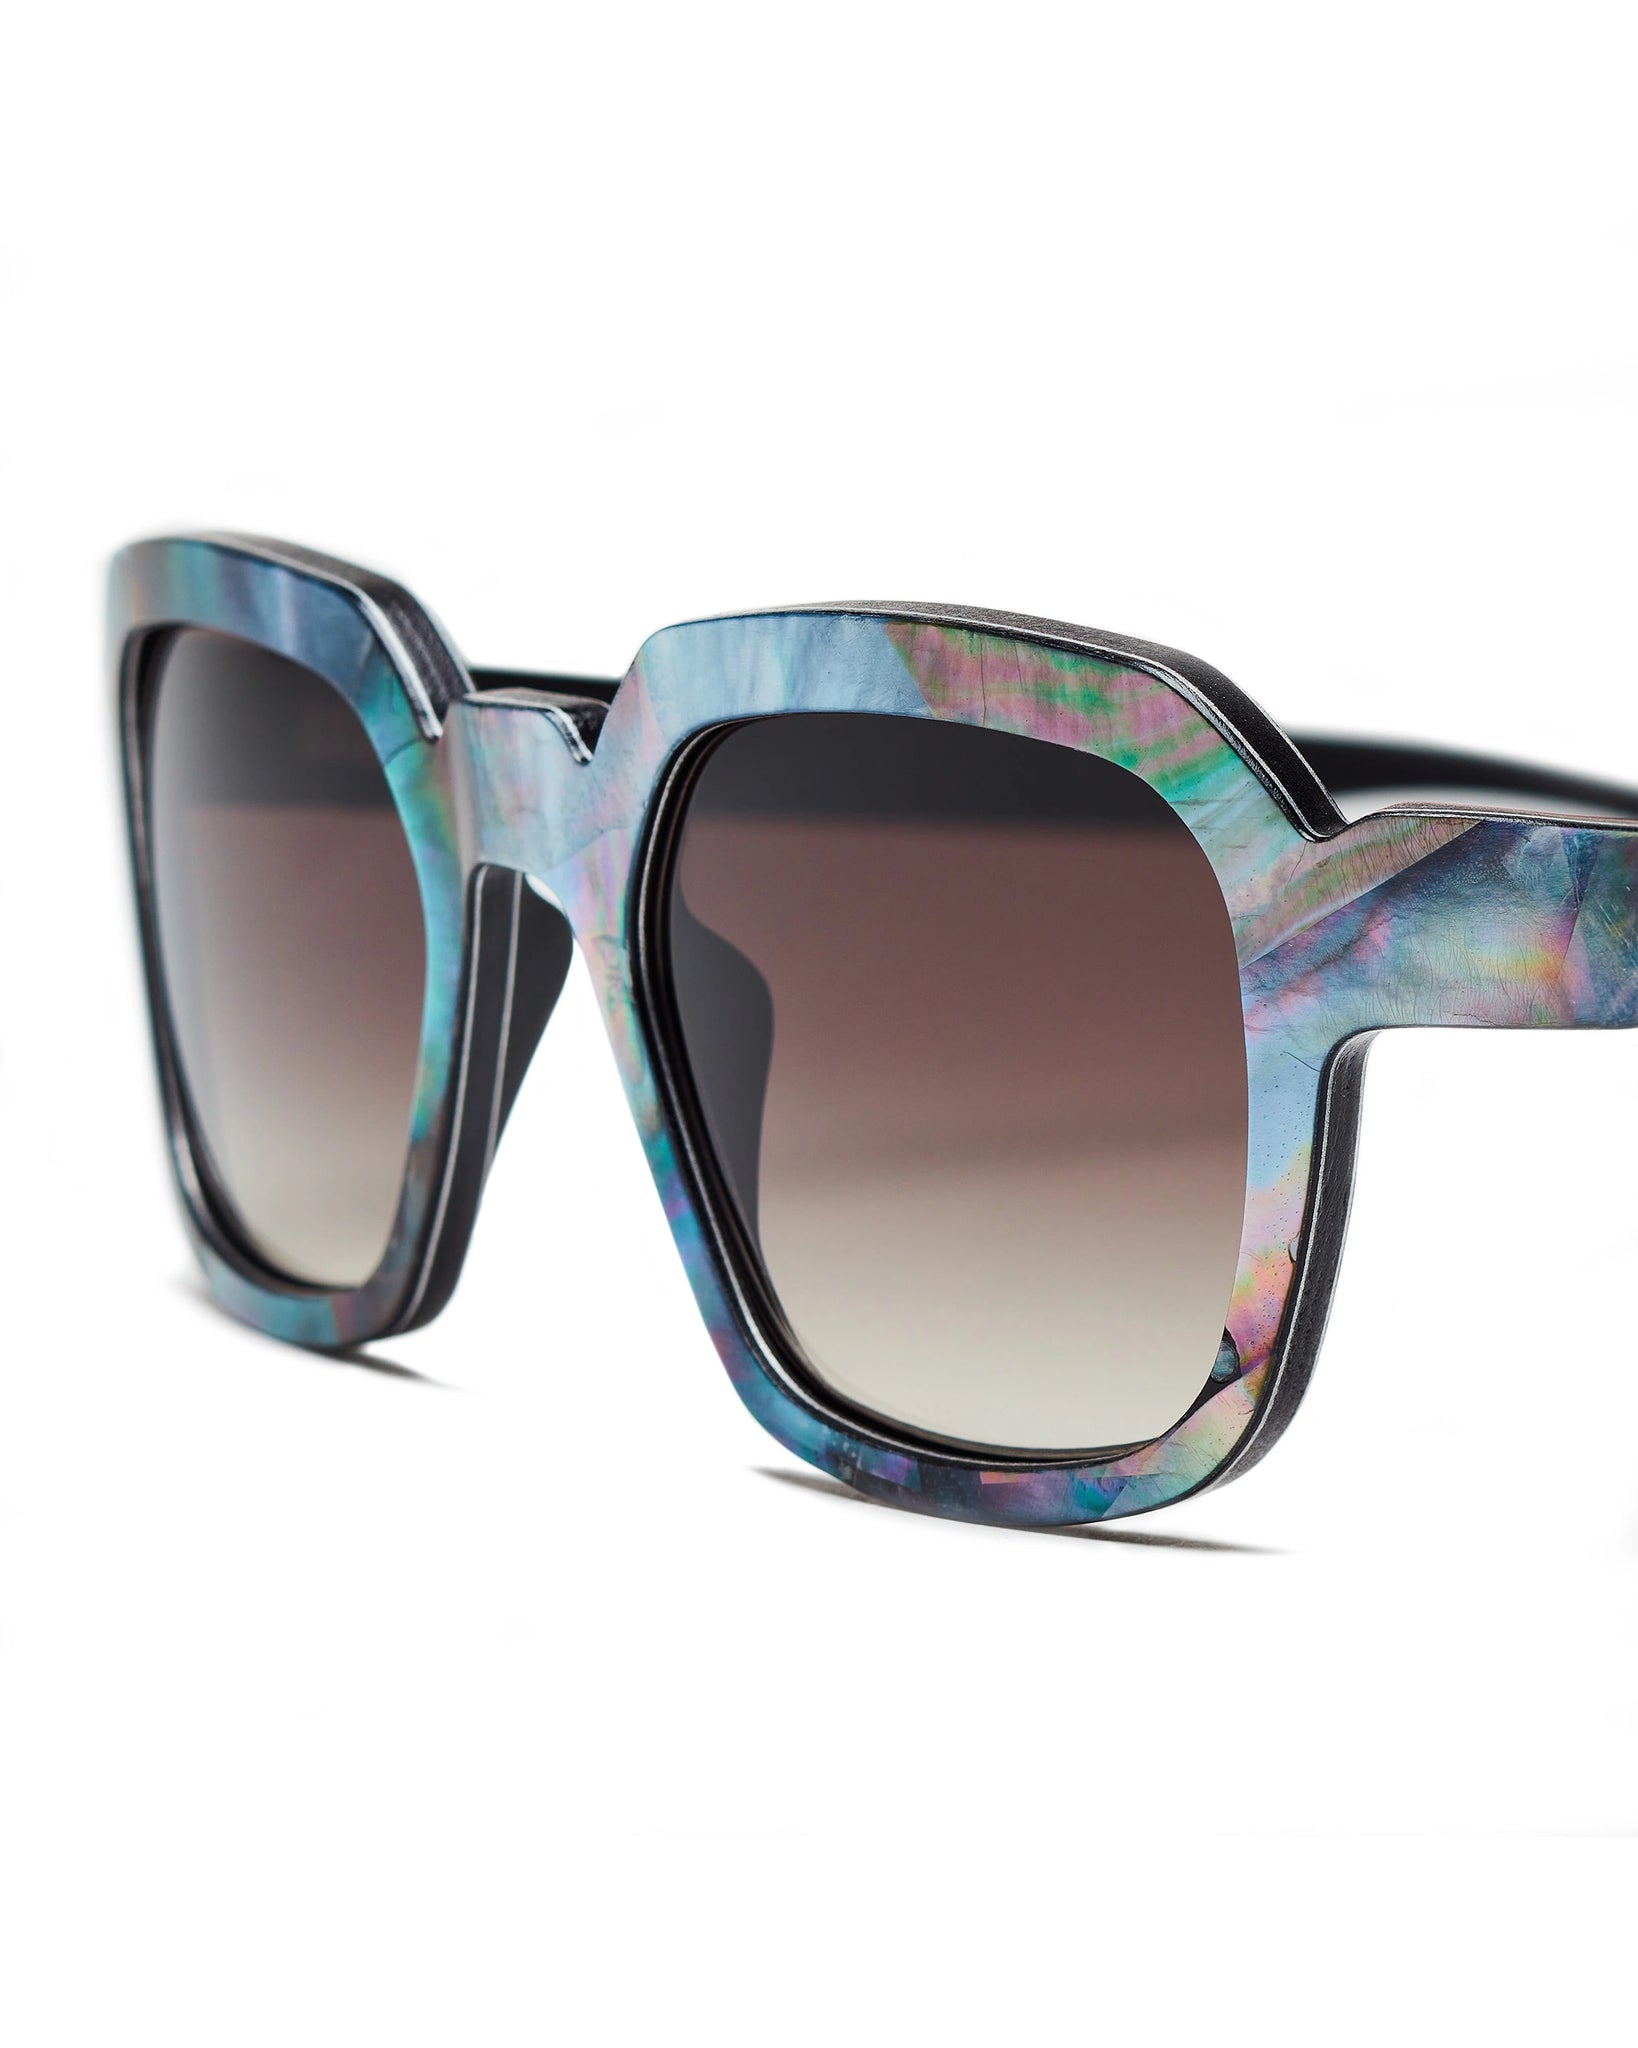 Superlativa® sunglasses model Tahiti